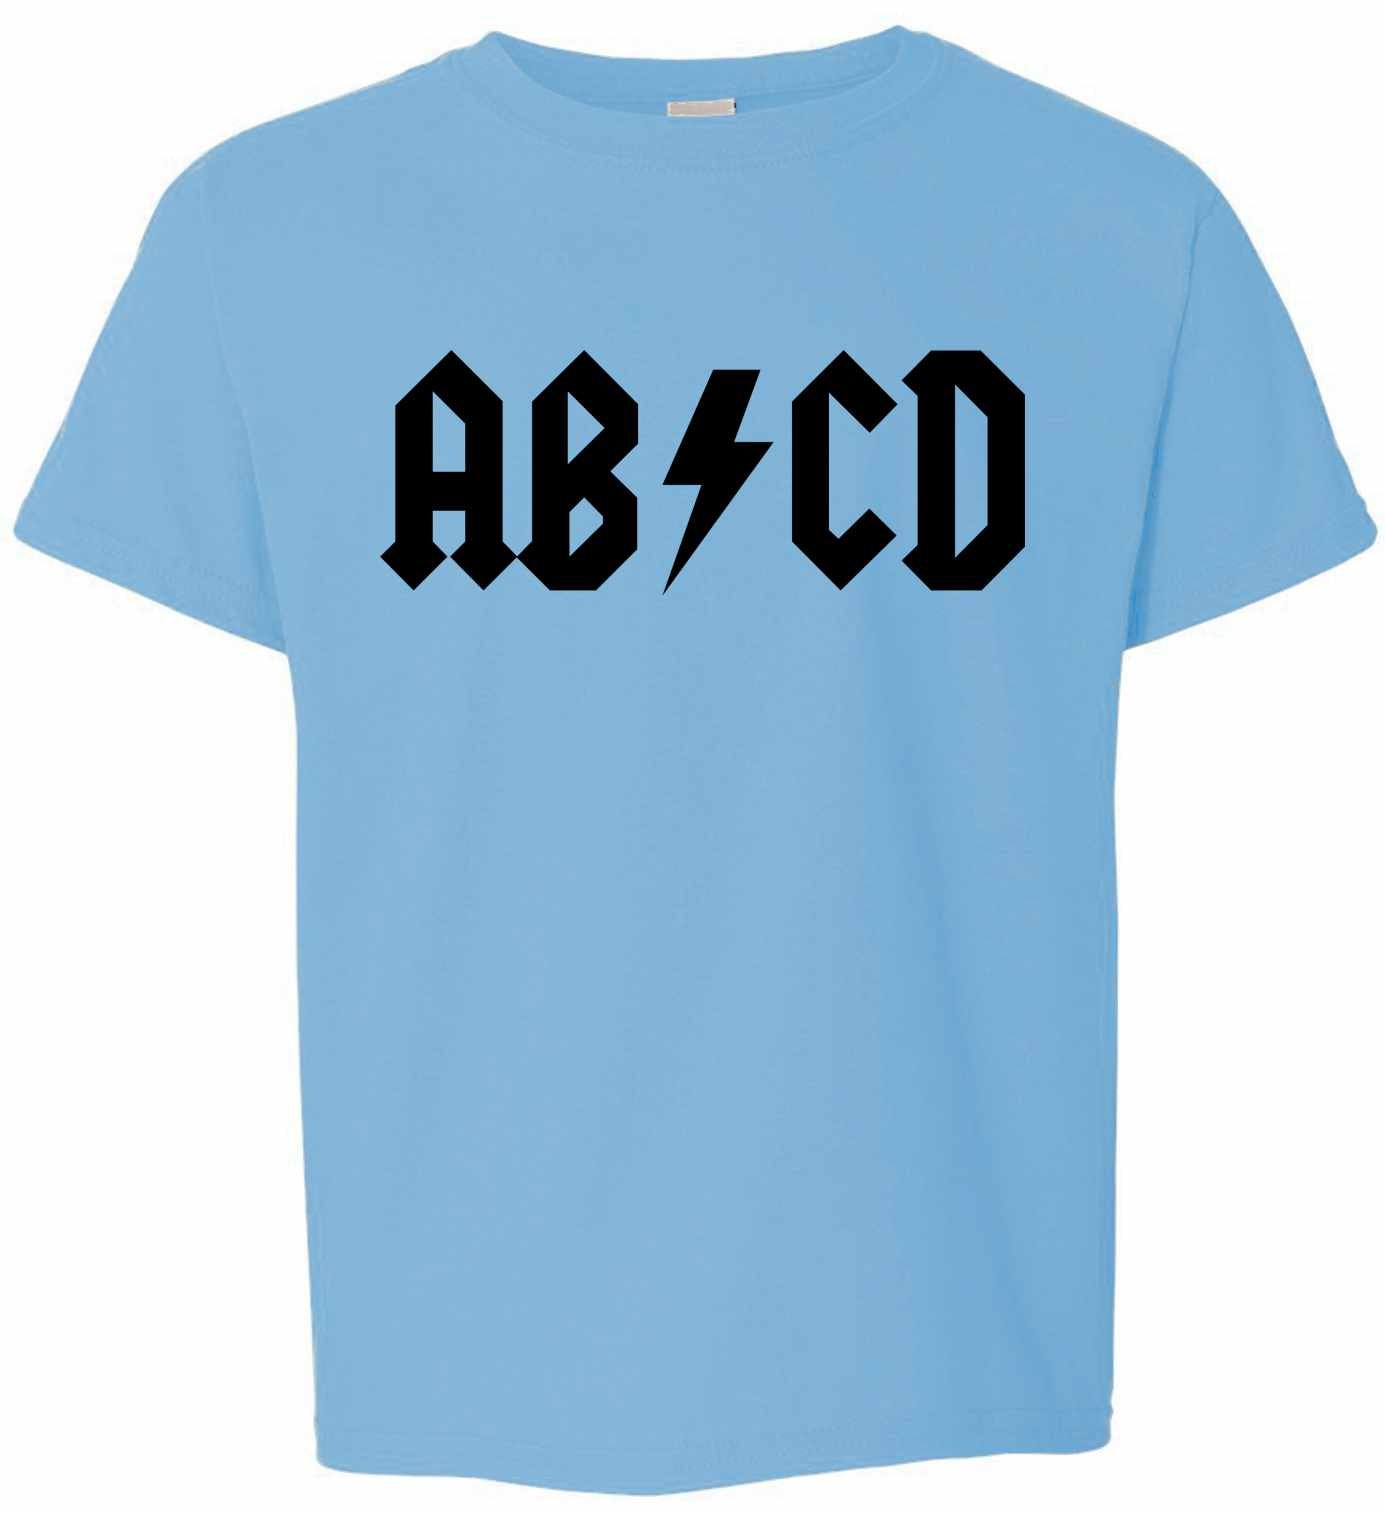 AB/CD Youth T-Shirt